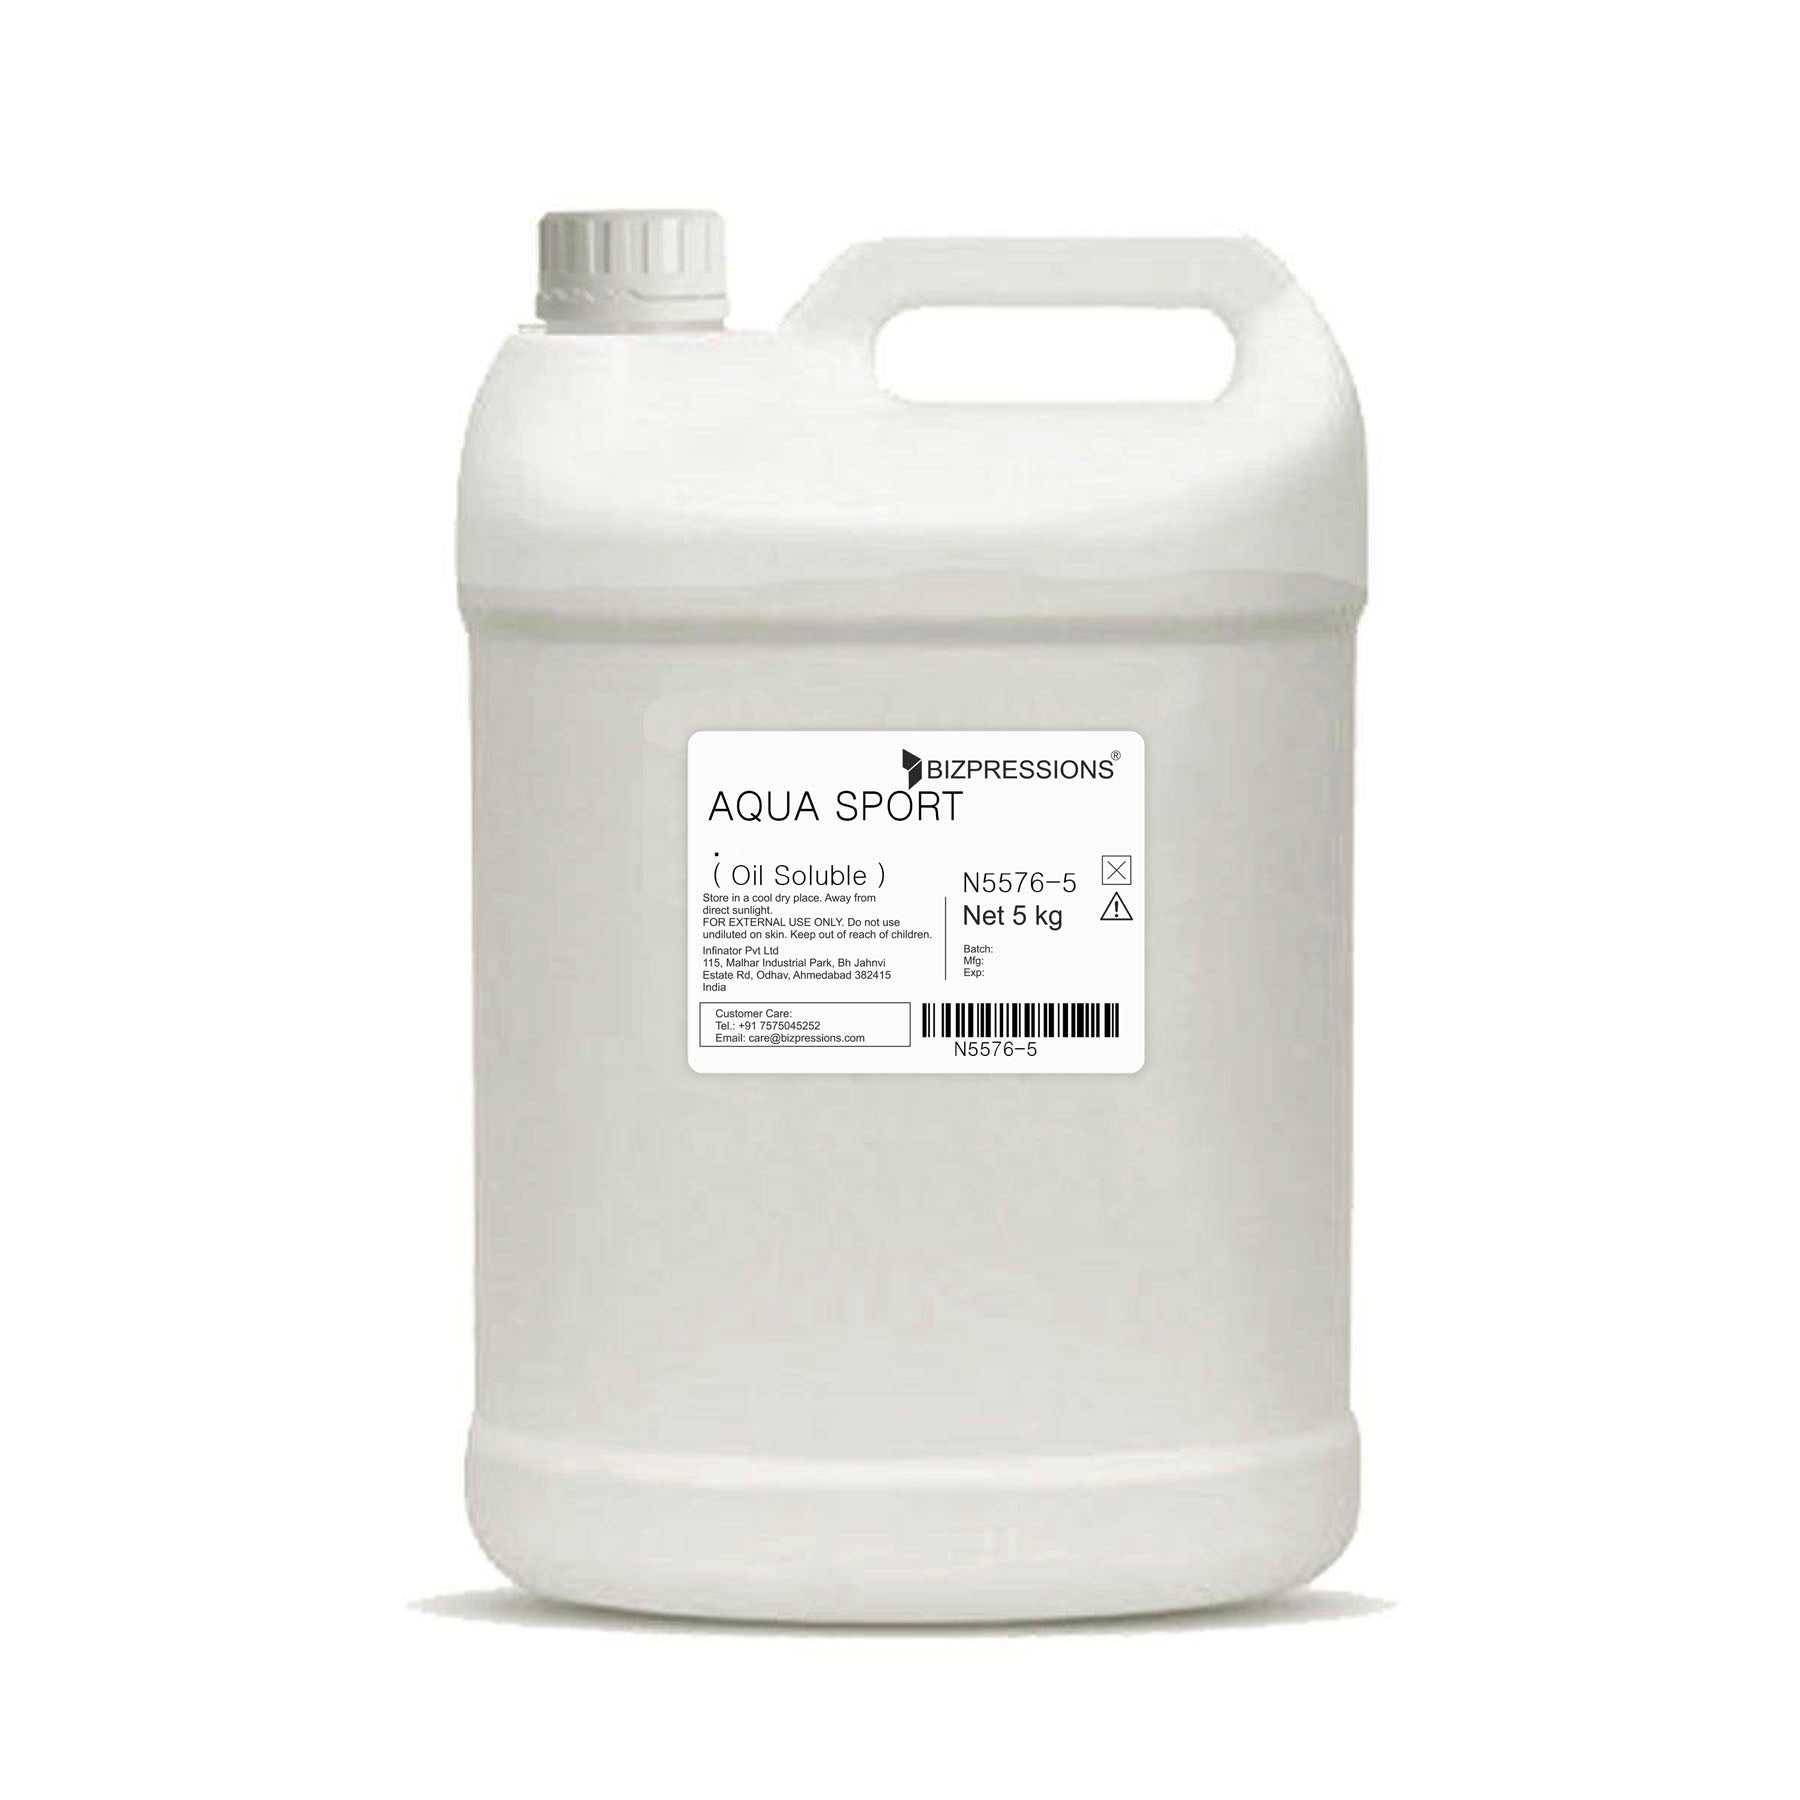 AQUA SPORT - Fragrance ( Oil Soluble ) - 5 kg